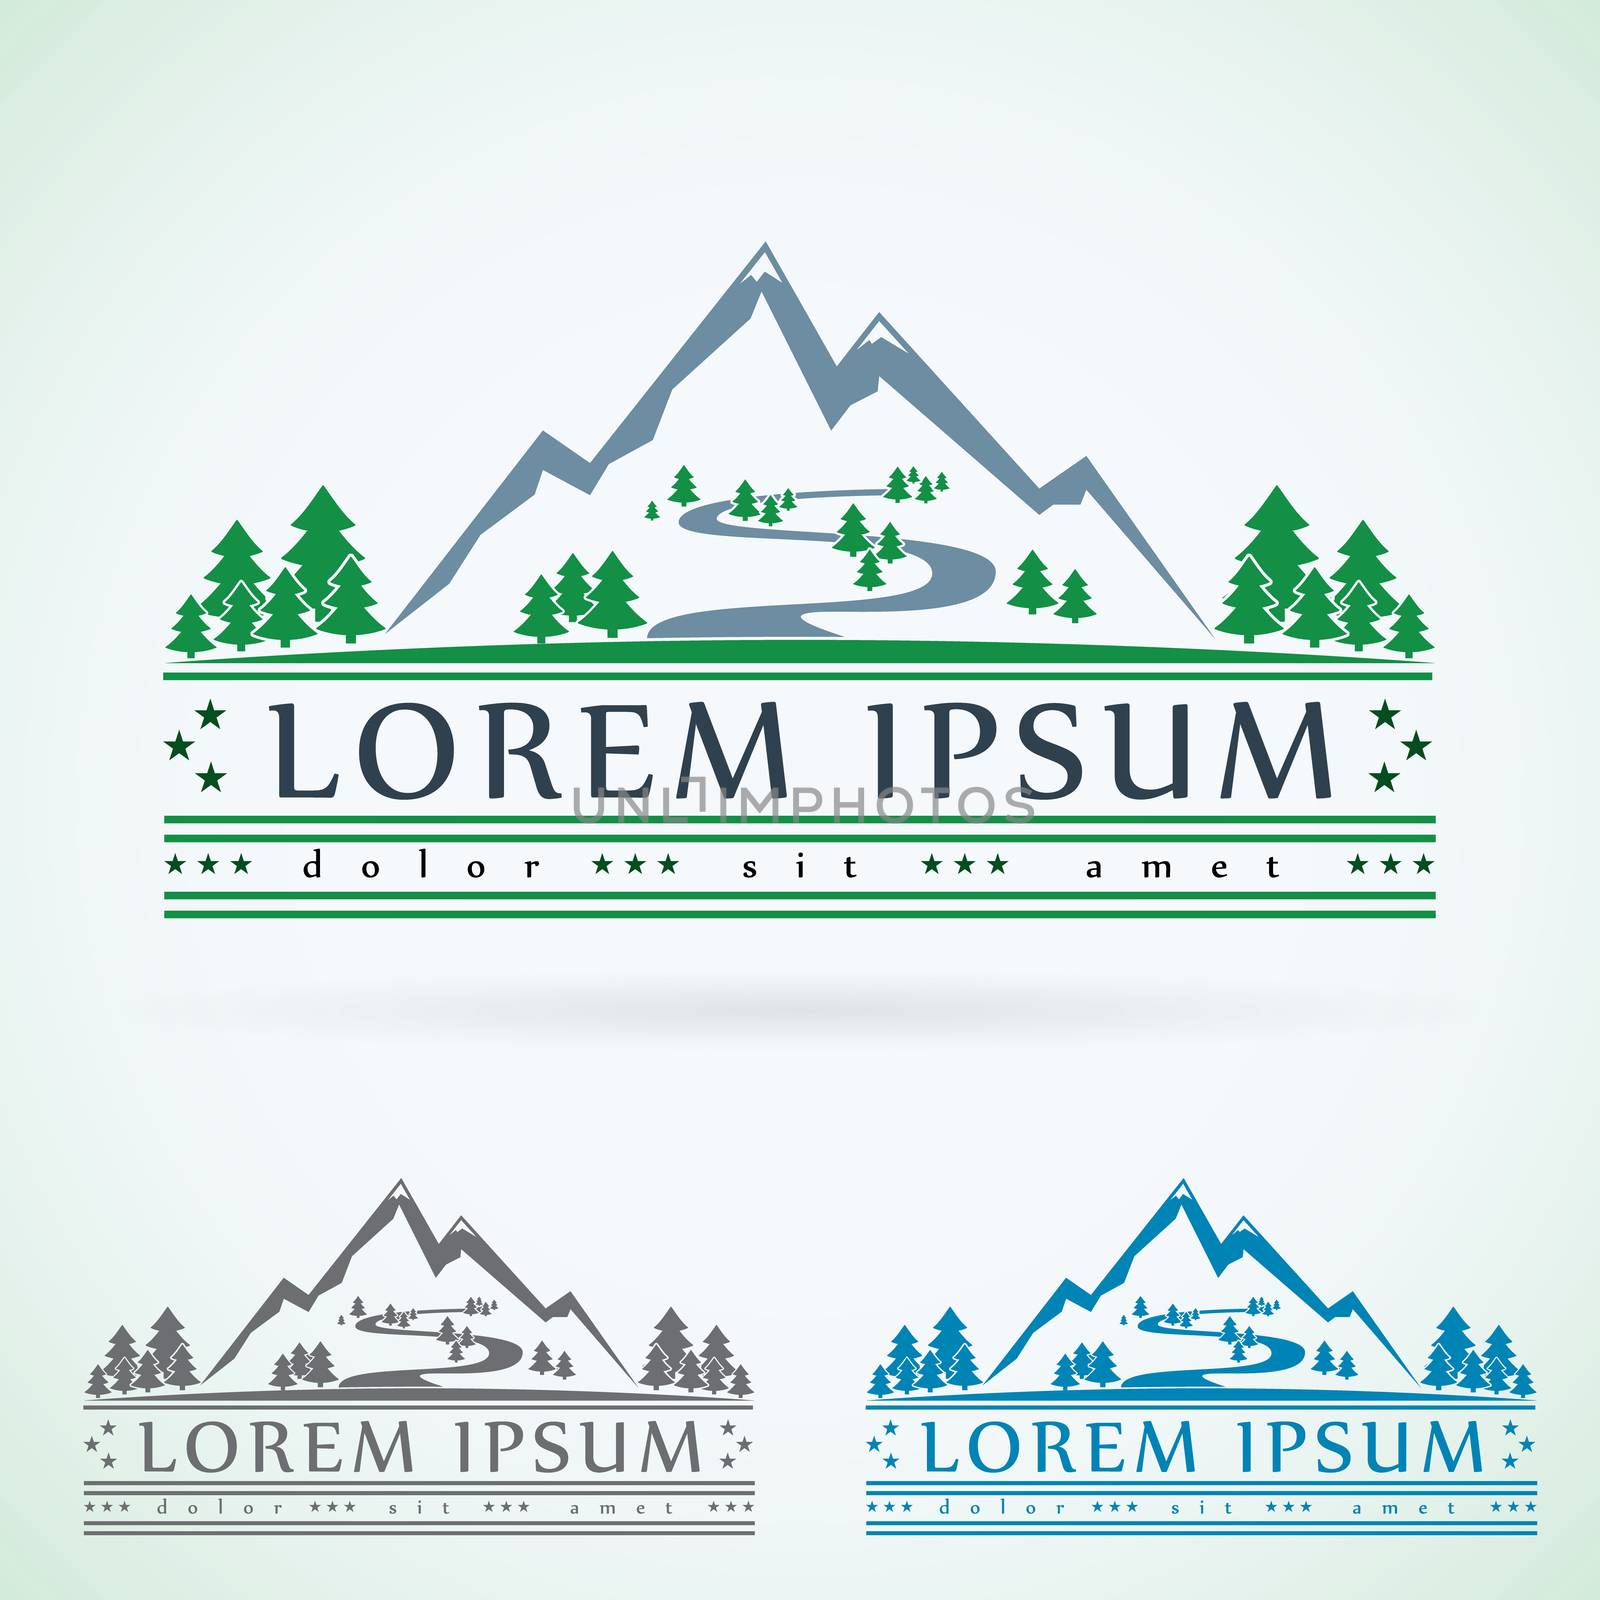 Mountains vintage vector logo design template, green tourism icon. 